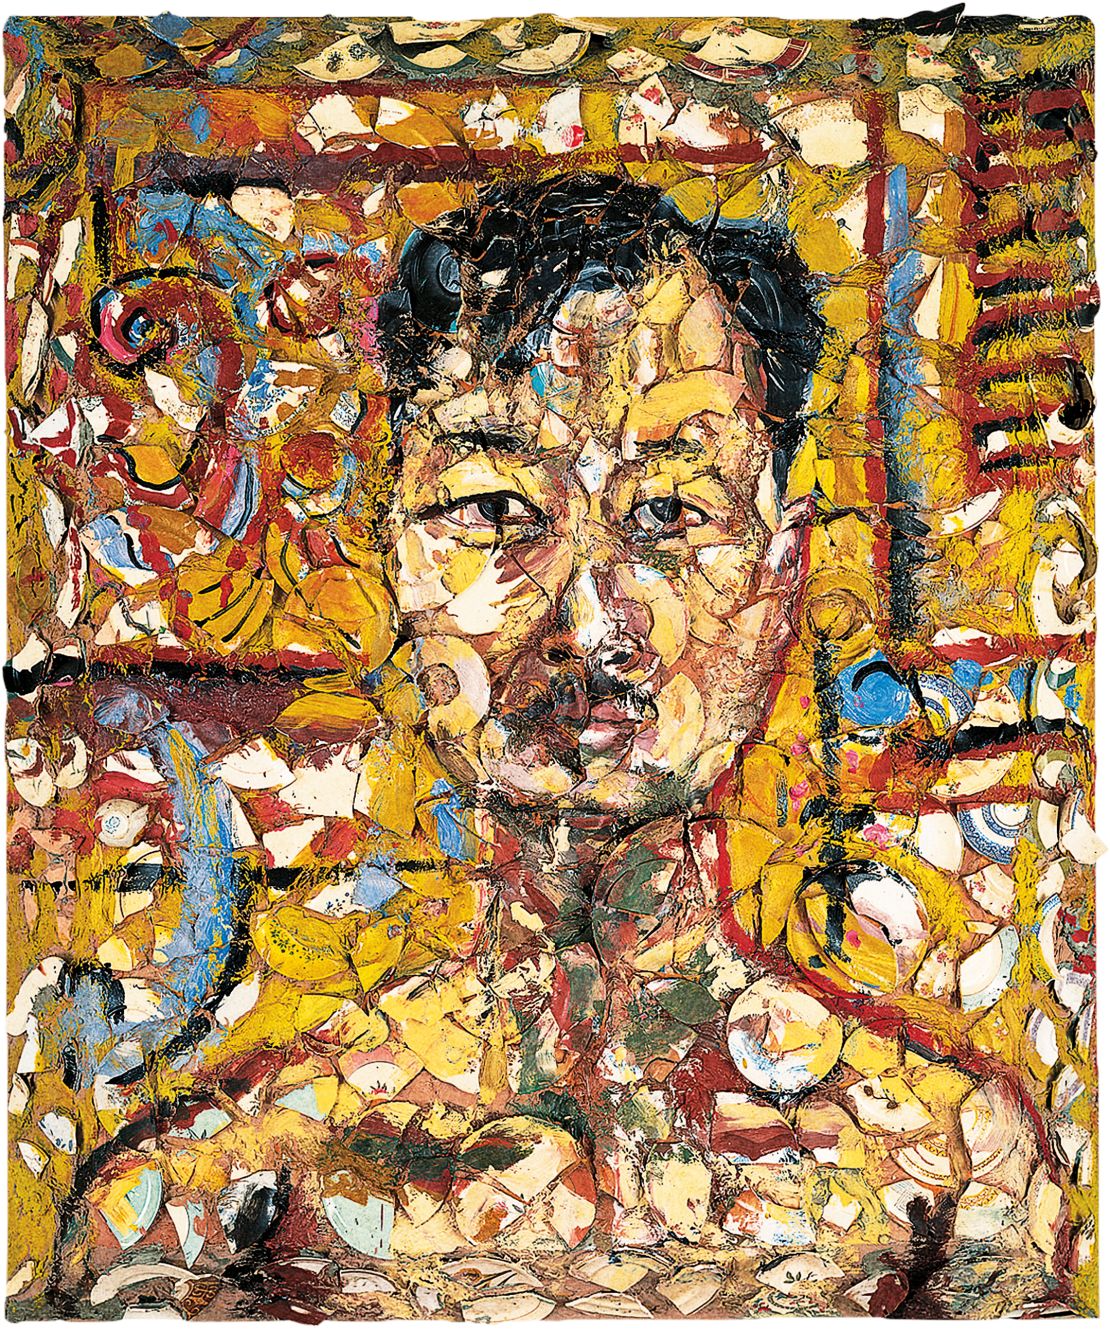 "Untitled (Portrait of Michael Chow)" (1984) by Julian Schnabel